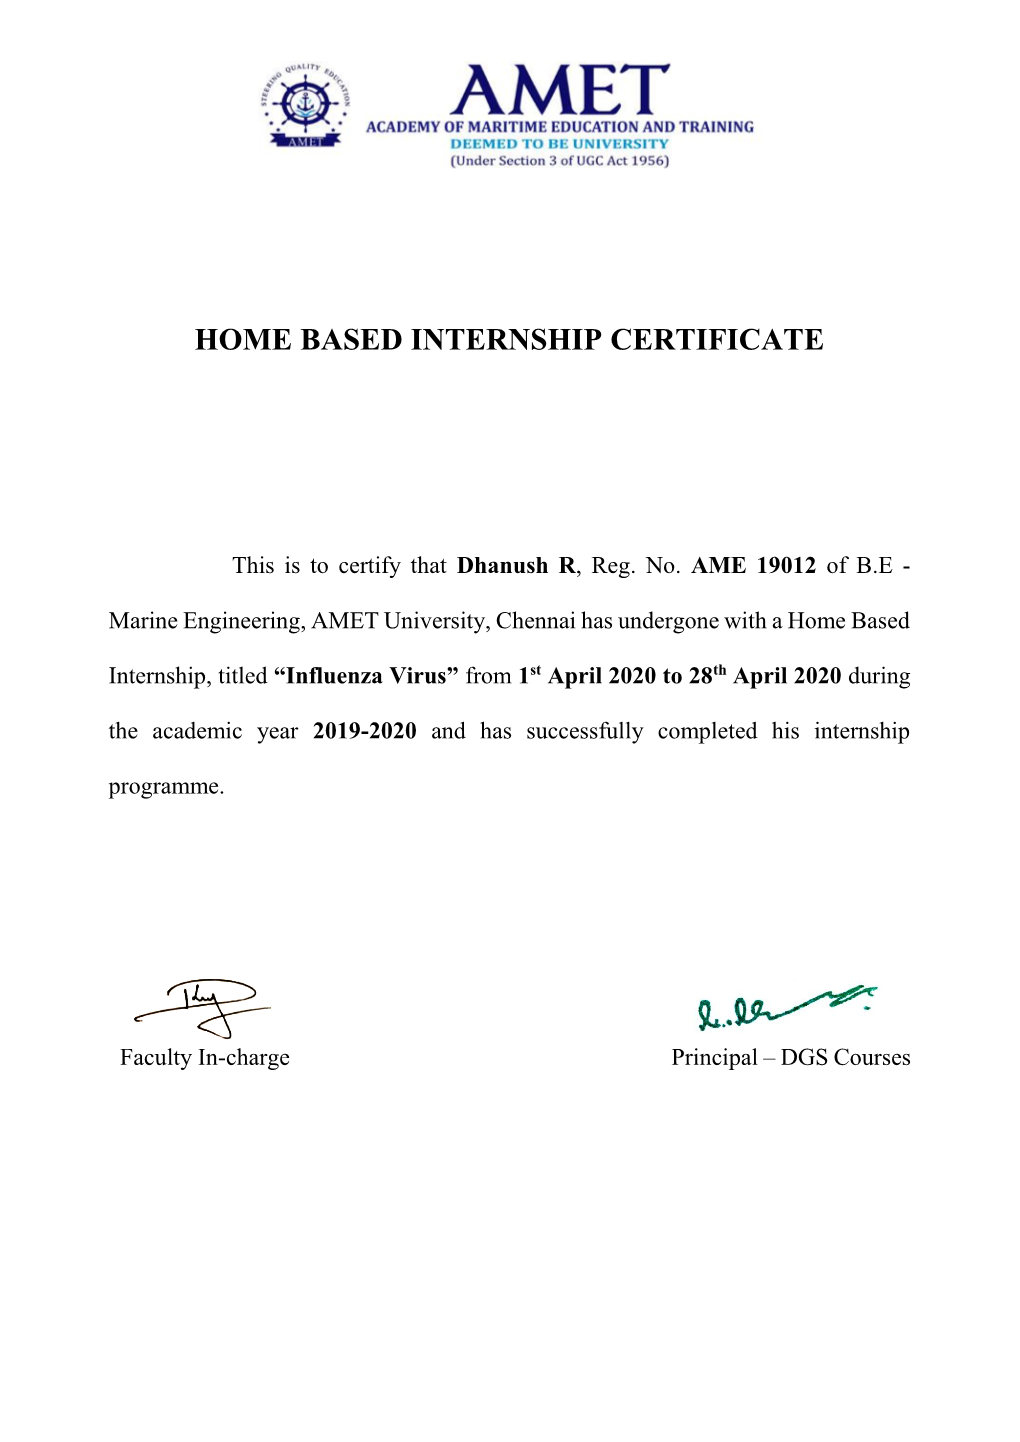 Home Based Internship Certificate